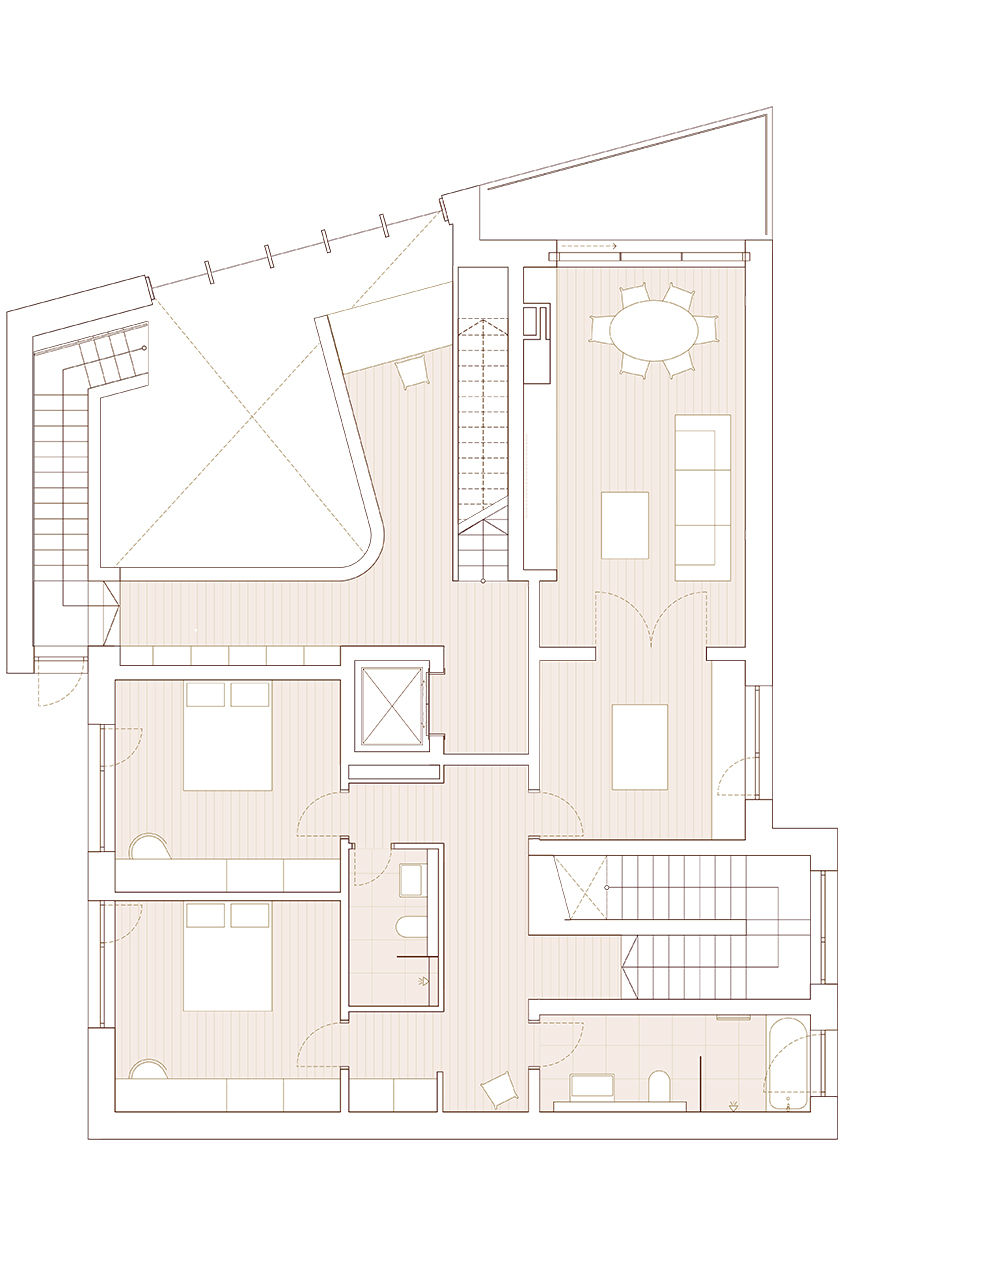 Lake house: floor plan 1st floor